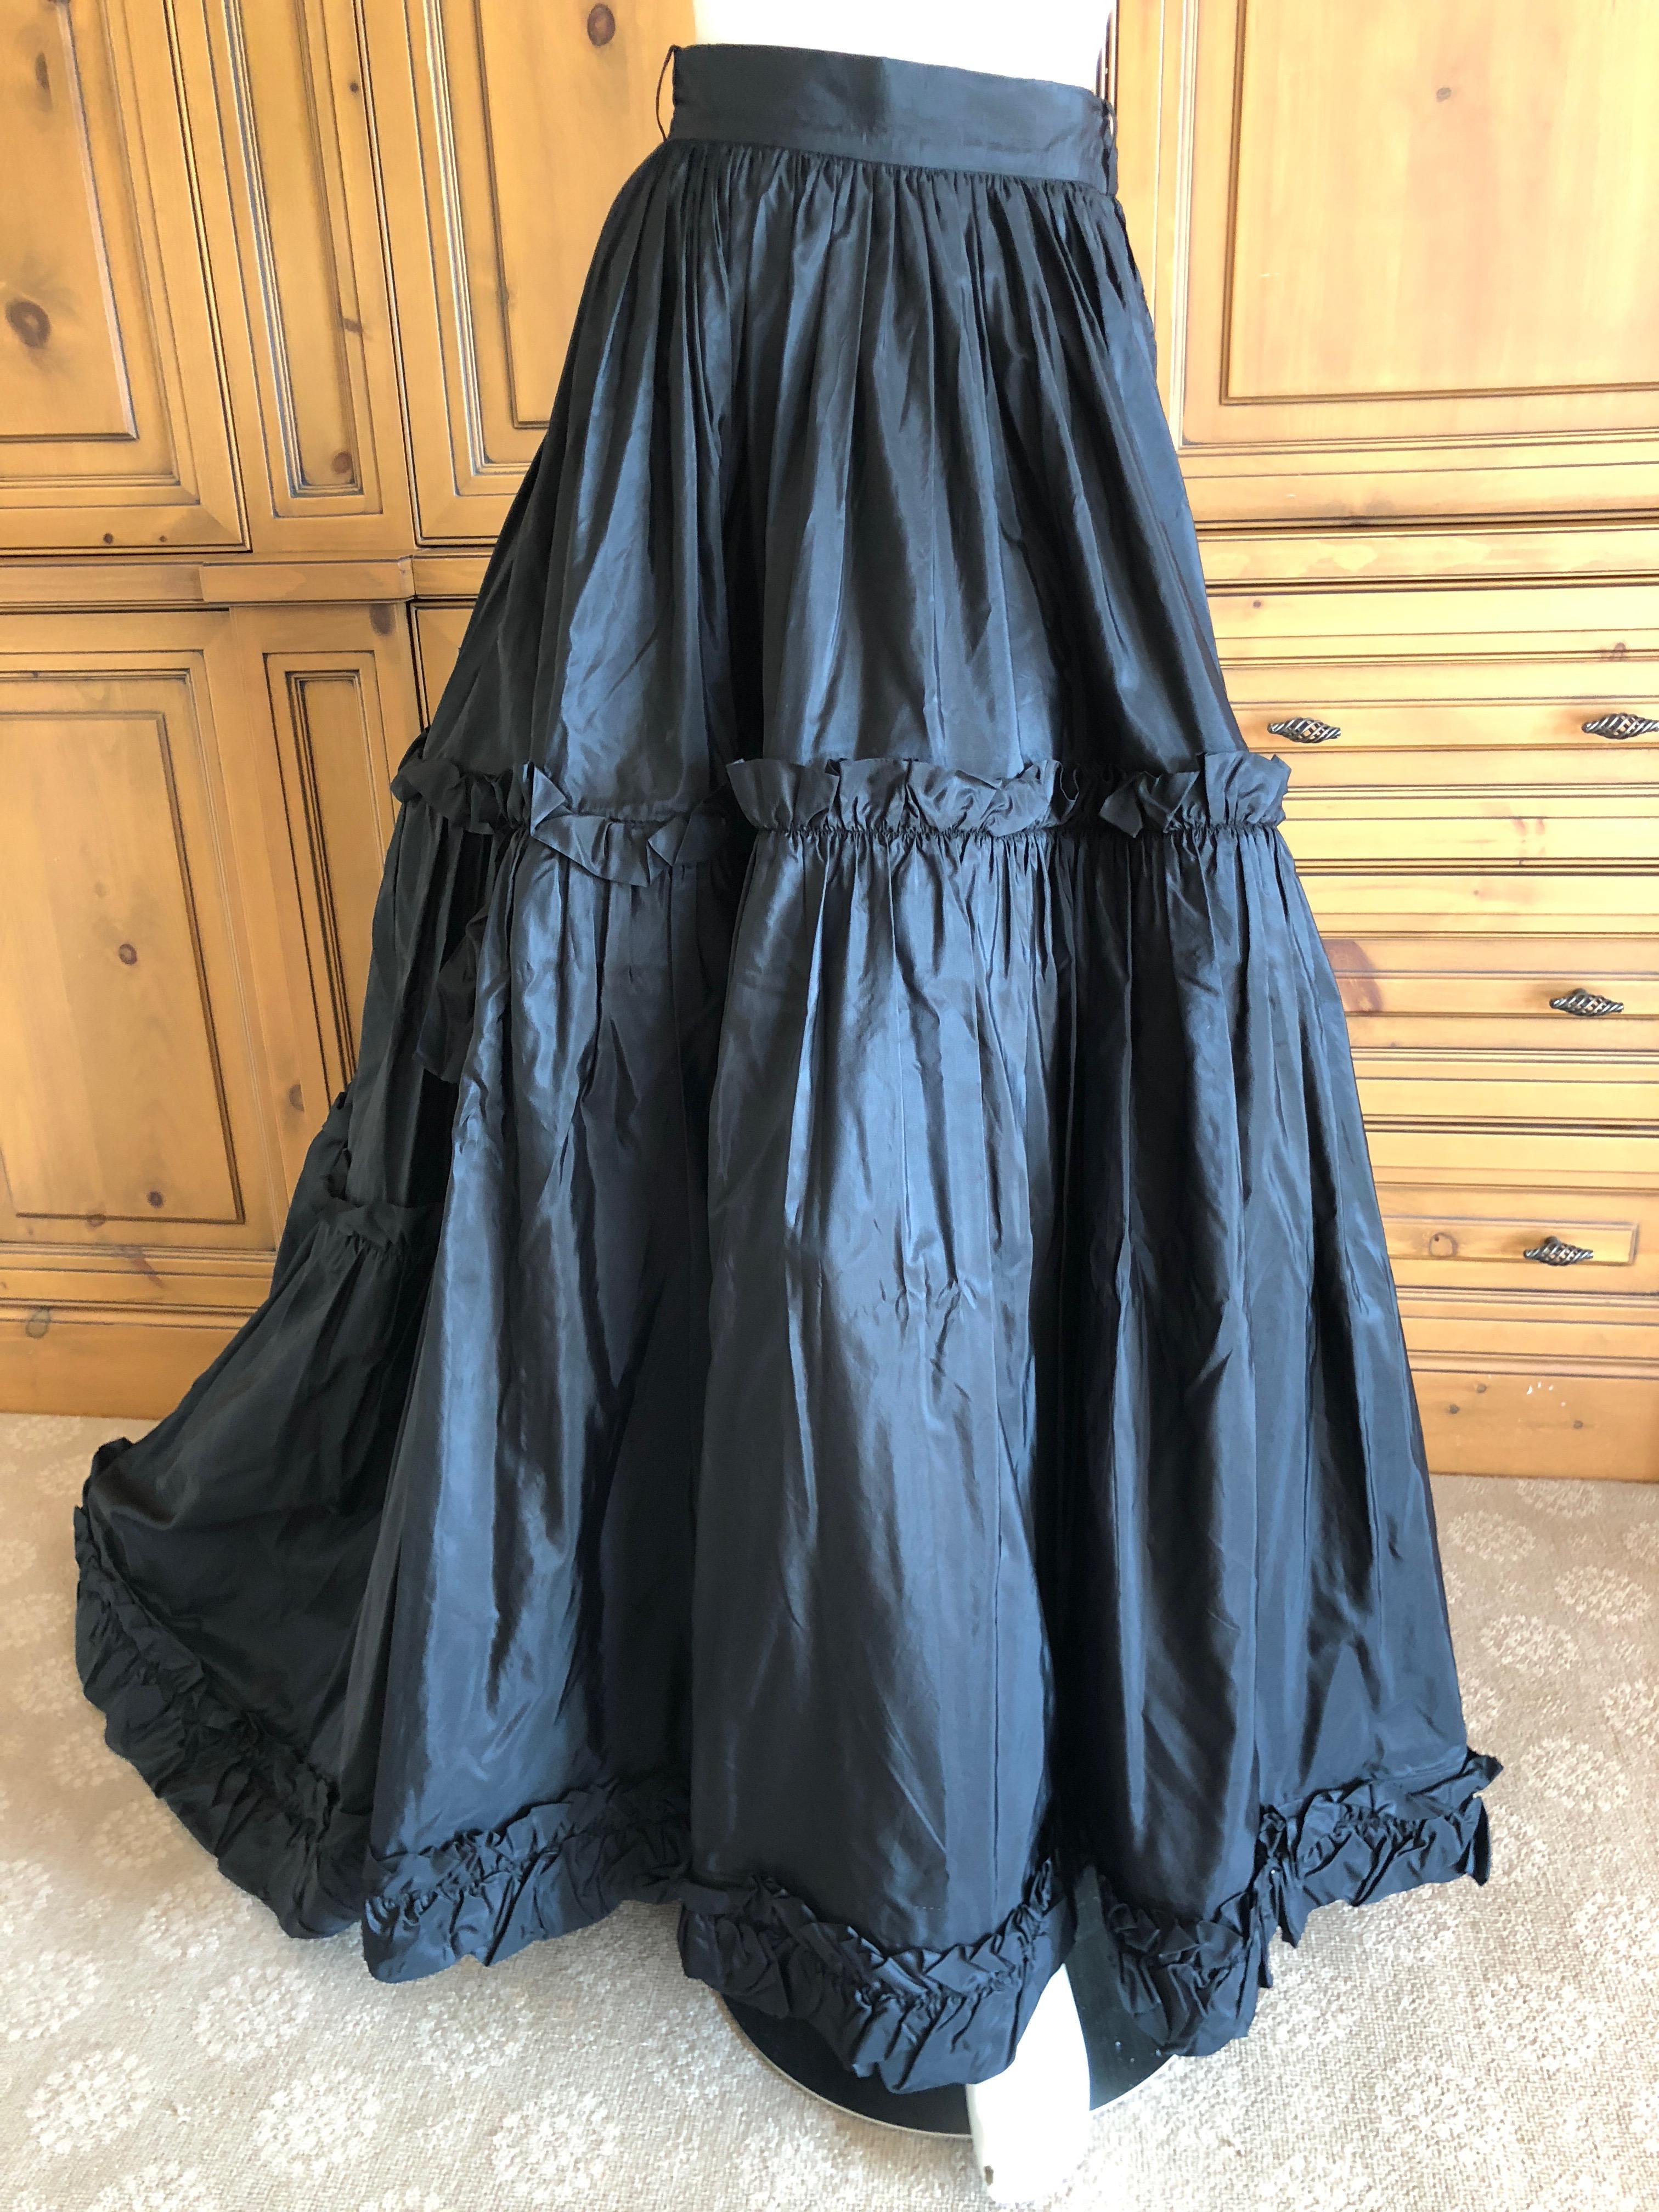 Yves Saint Laurent Rive Guache 1982 Dramatic Black Taffeta Ball Skirt with Train For Sale 6